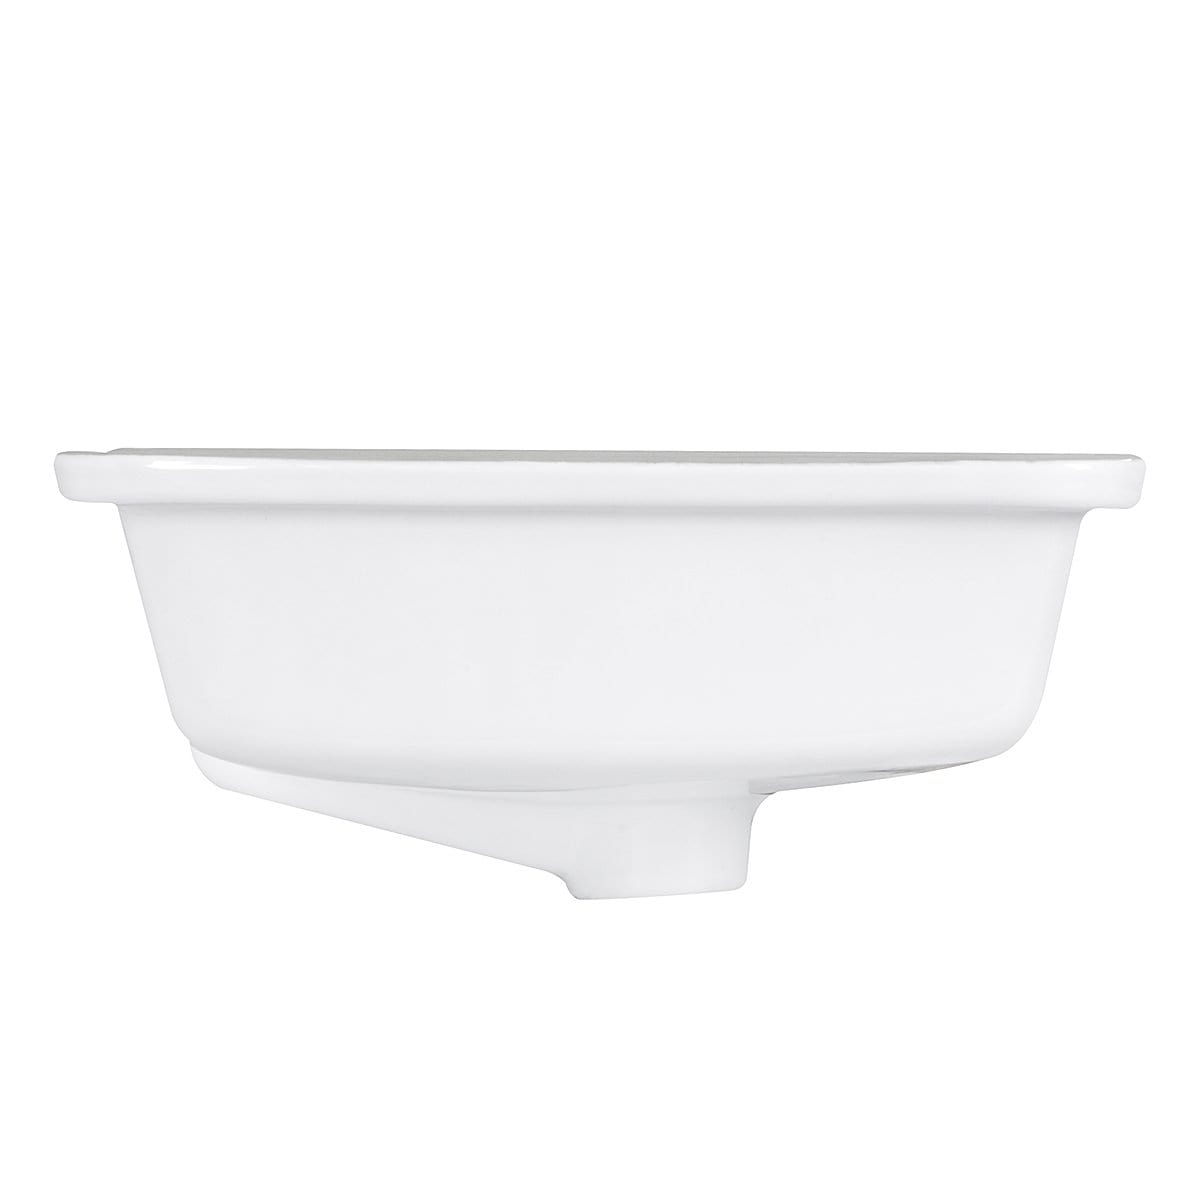 Nantucket 17" Undermount Ceramic Sink GB-17x13-W